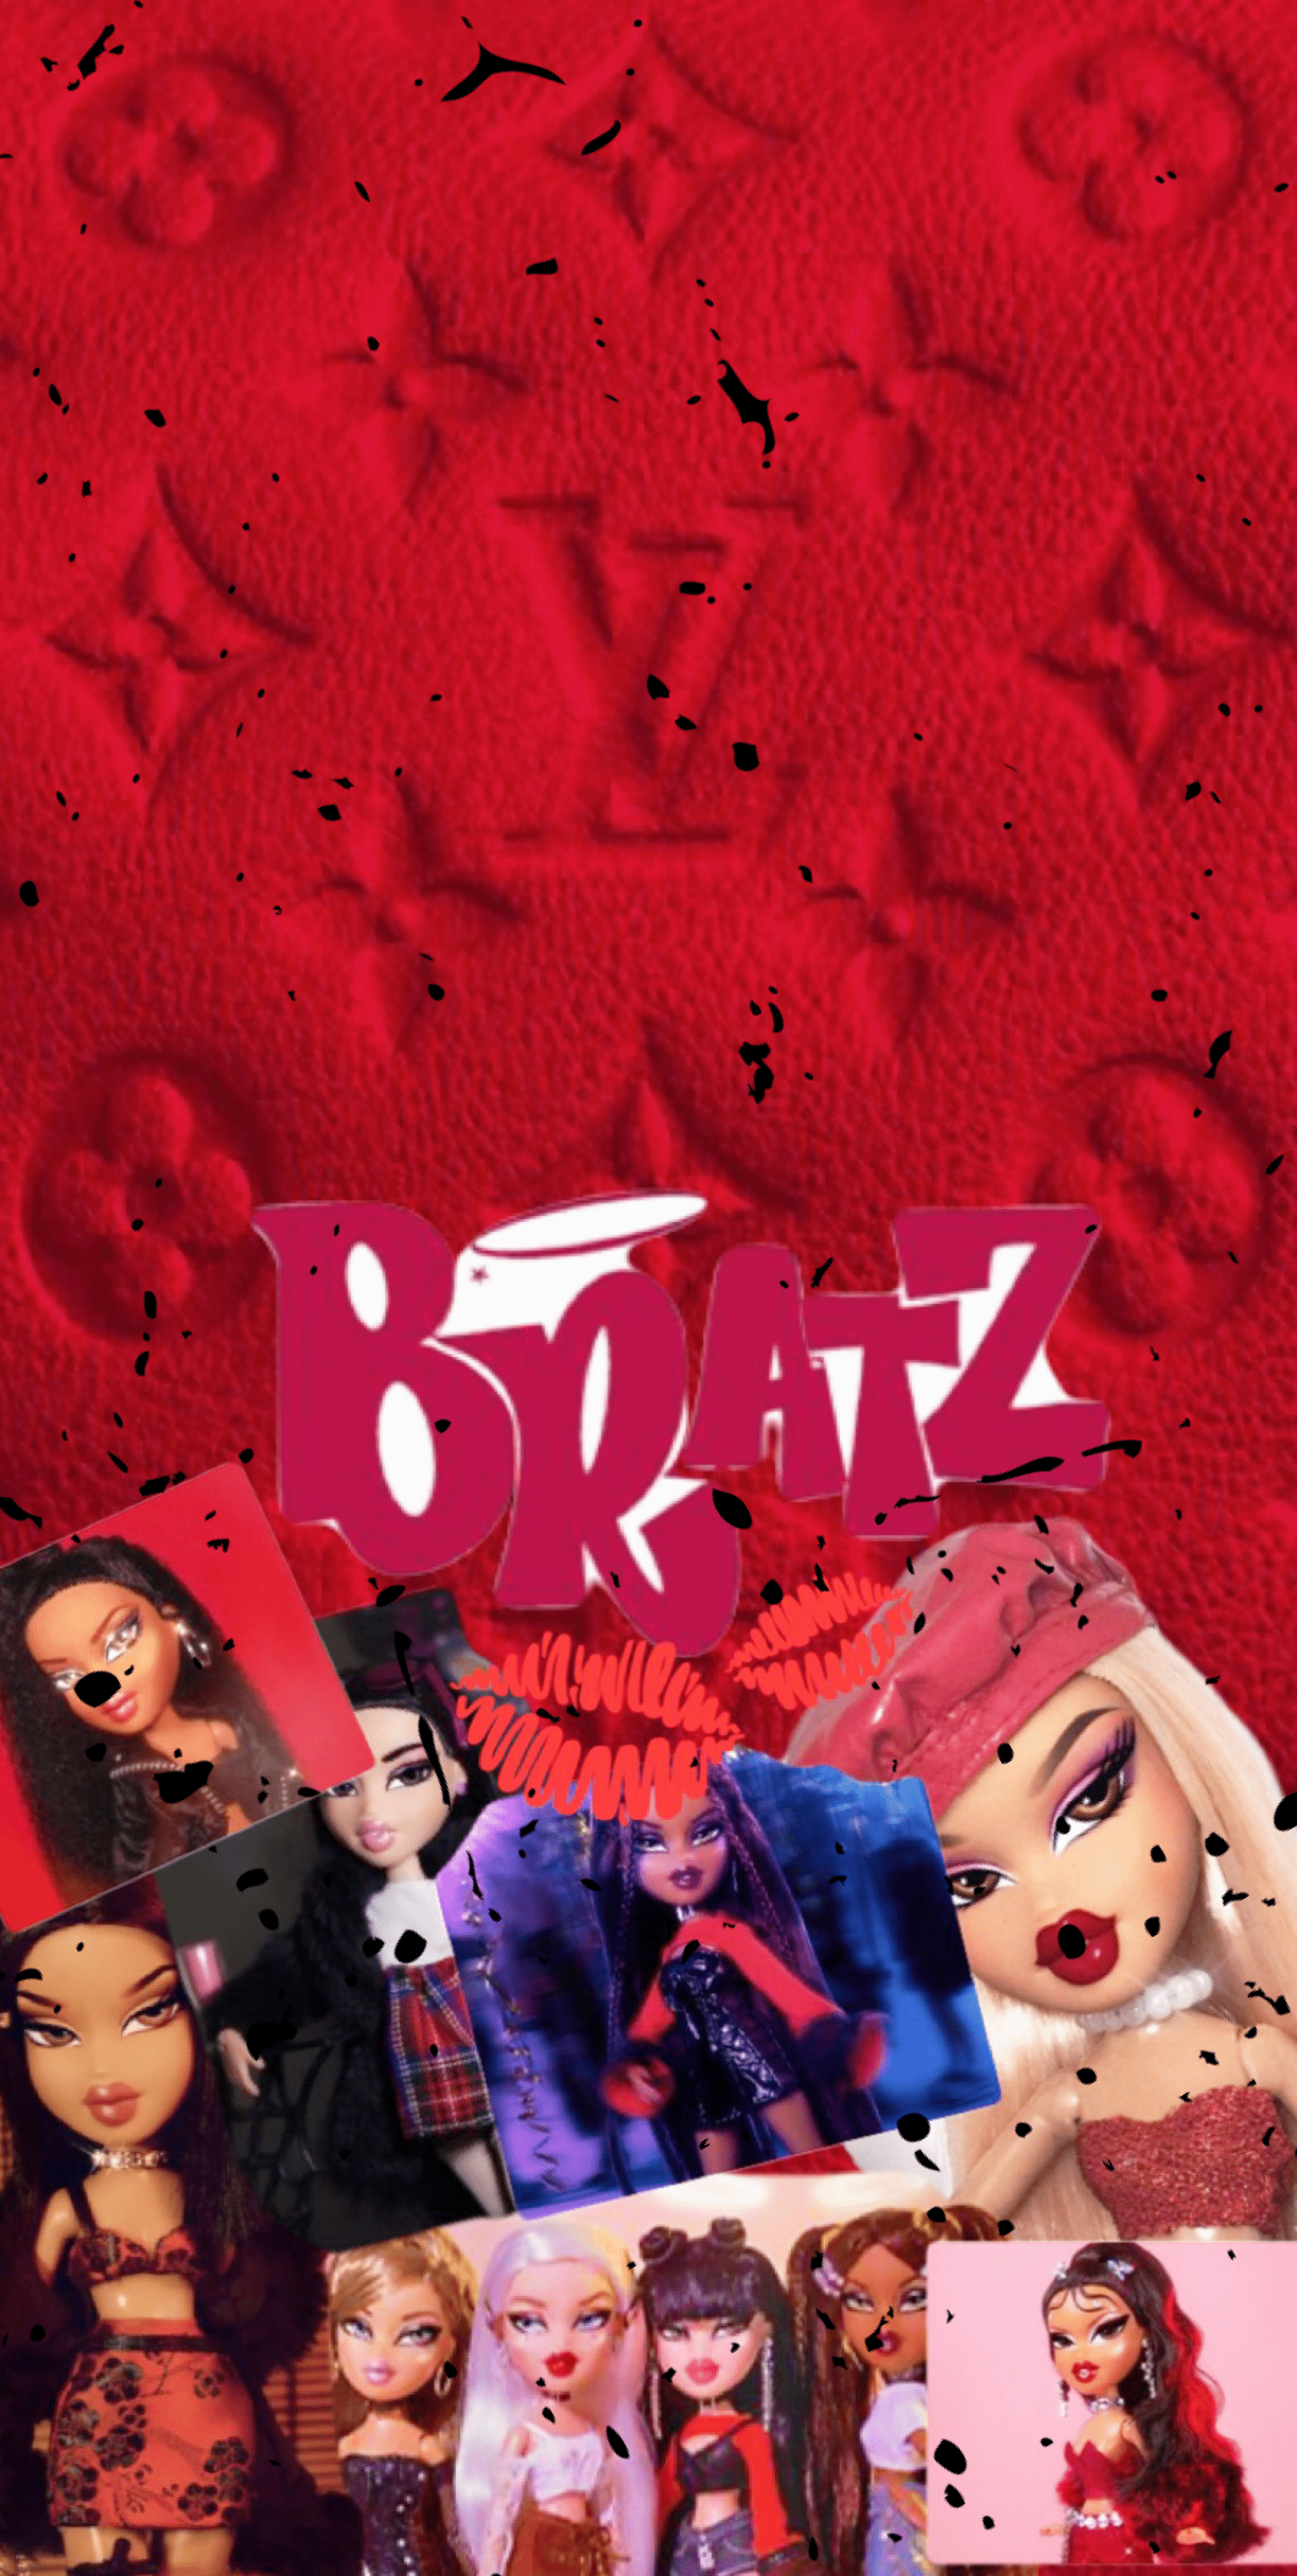 Red Bratz wallpaper with pictures of the dolls - Bratz, Louis Vuitton